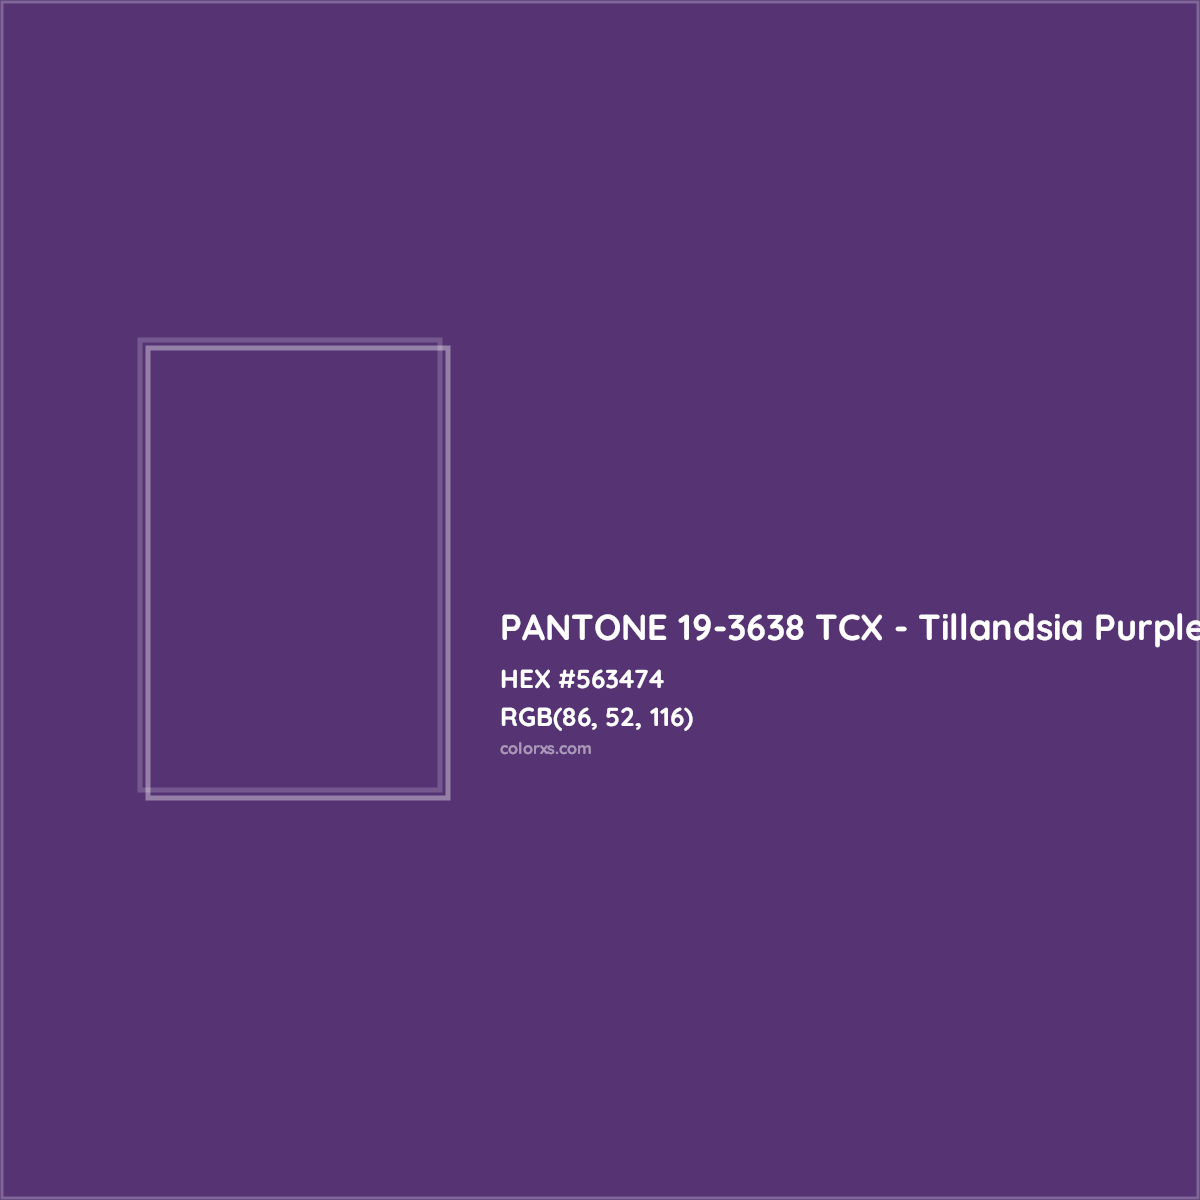 HEX #563474 PANTONE 19-3638 TCX - Tillandsia Purple CMS Pantone TCX - Color Code